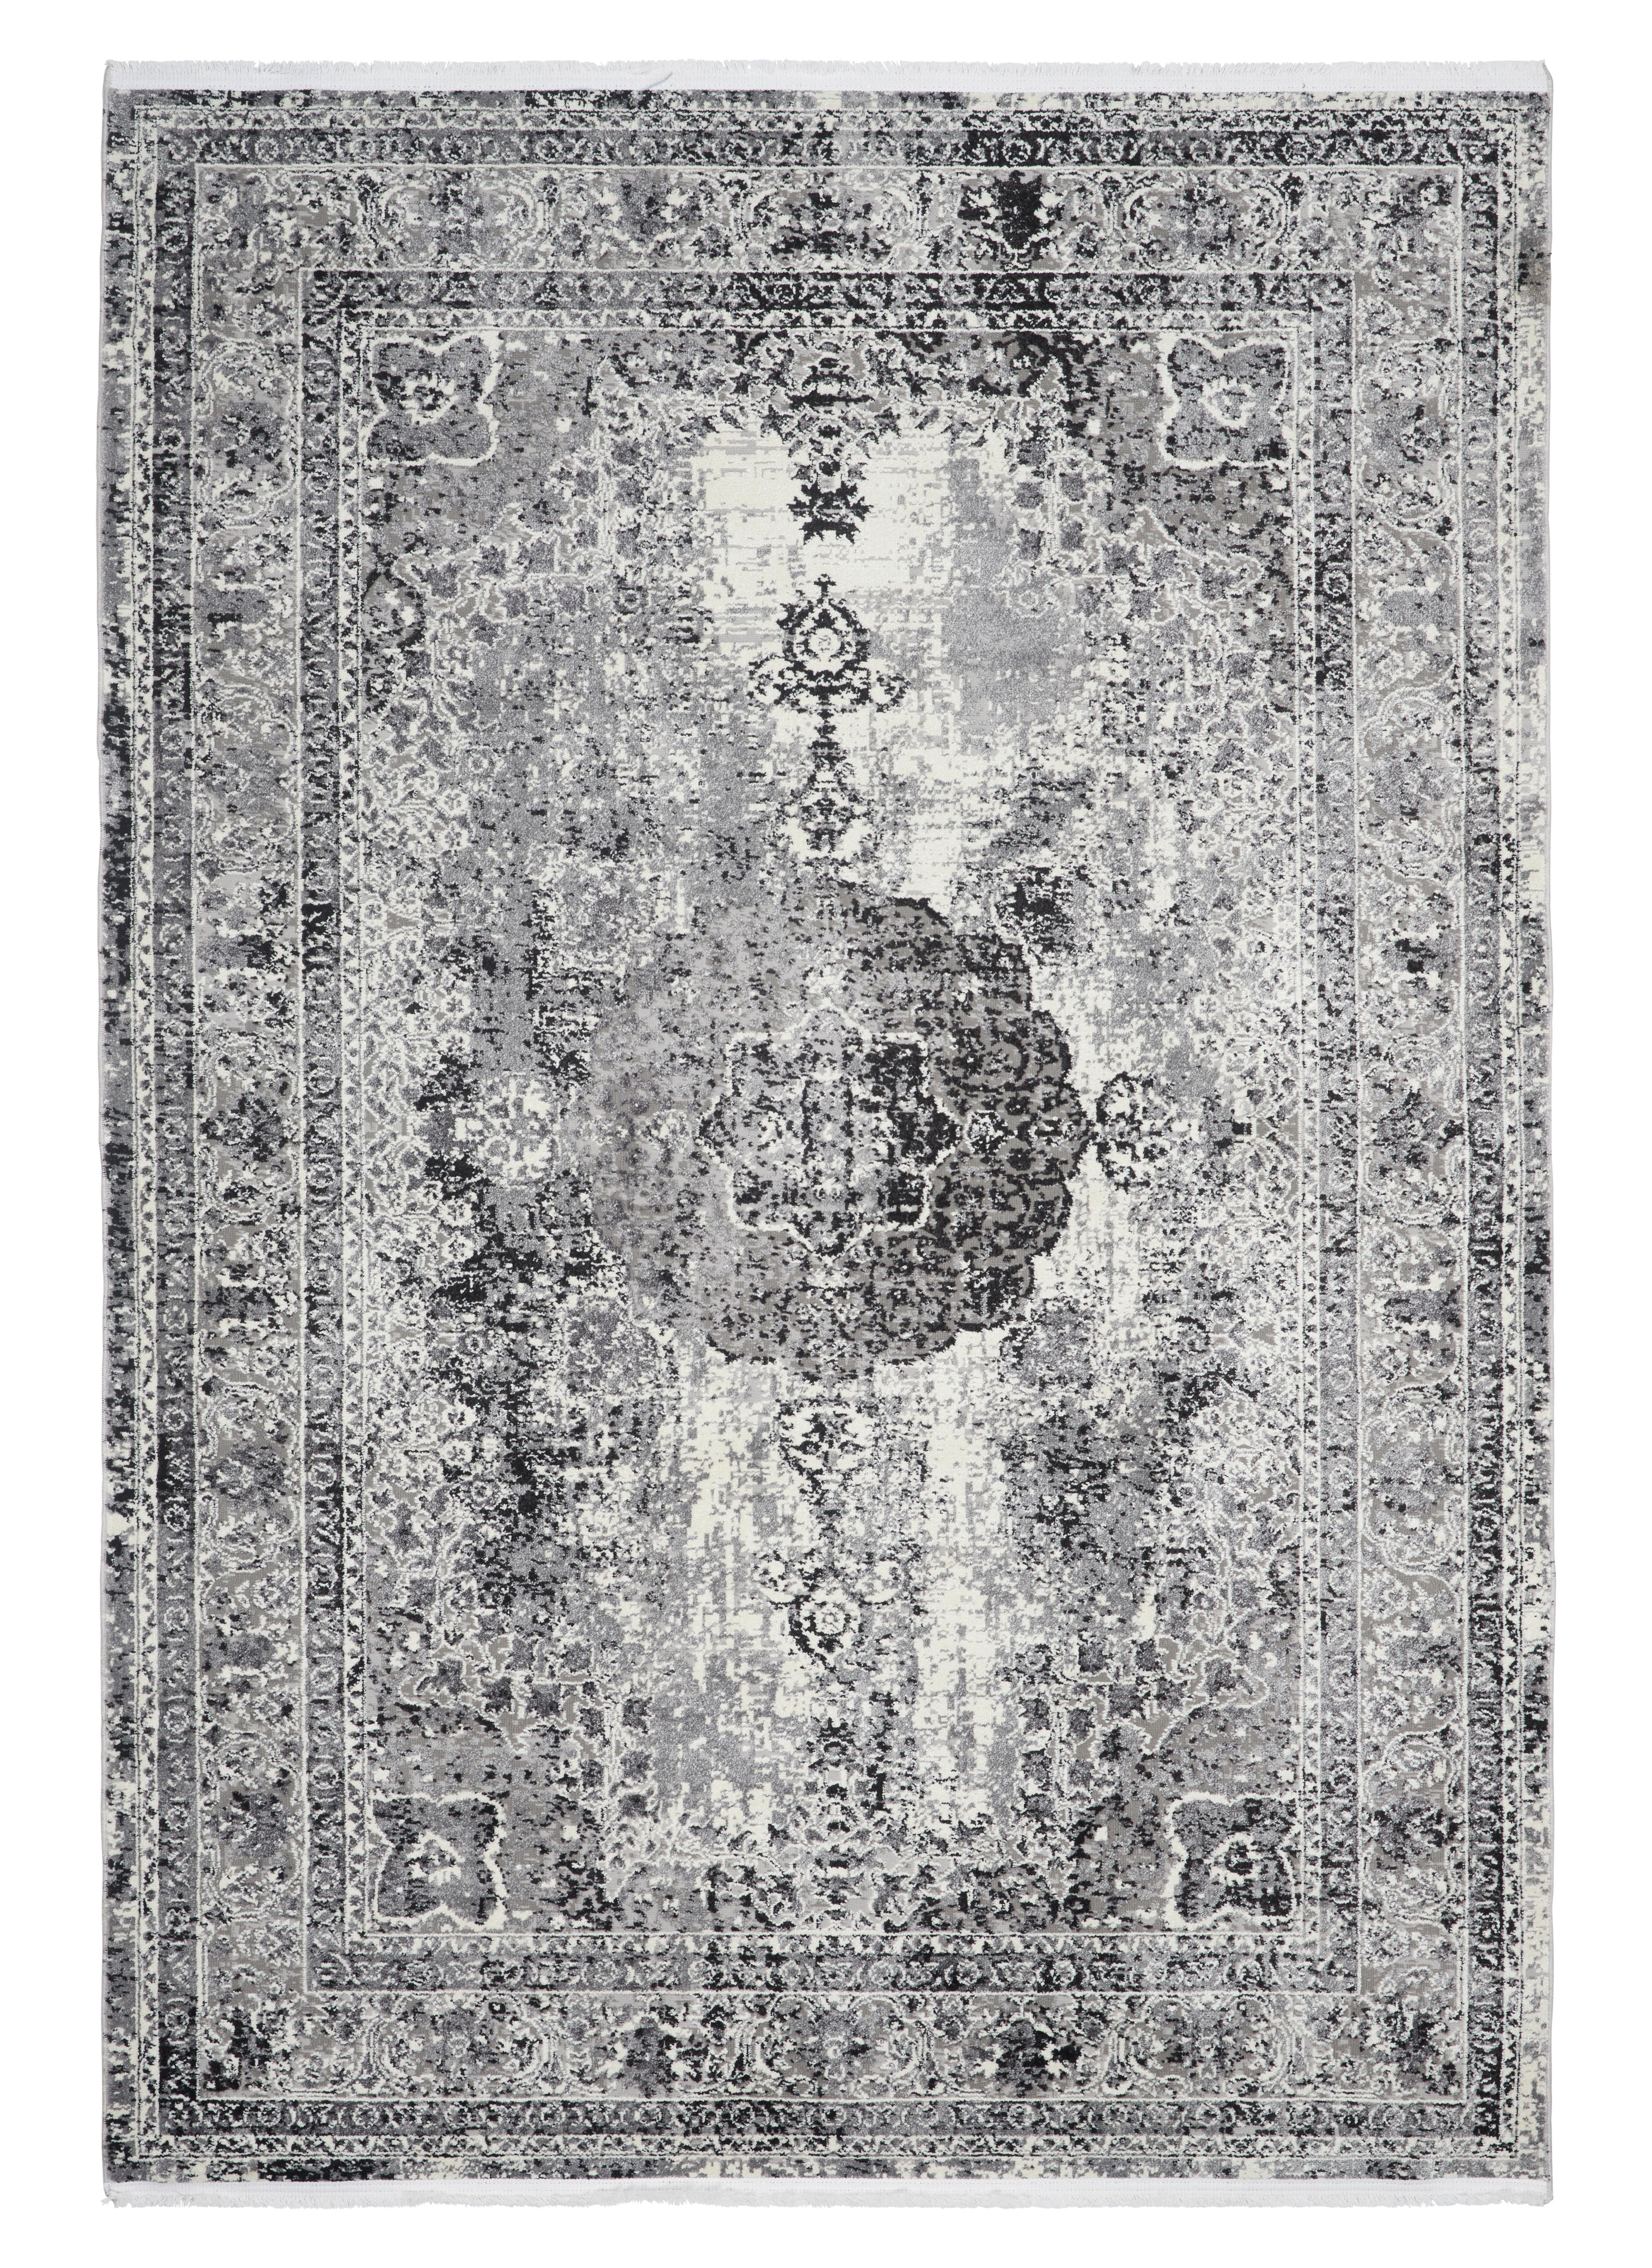 Tkaný Koberec Marcus 2, 120/170cm - krémová/světle šedá, textil (120l) - Modern Living